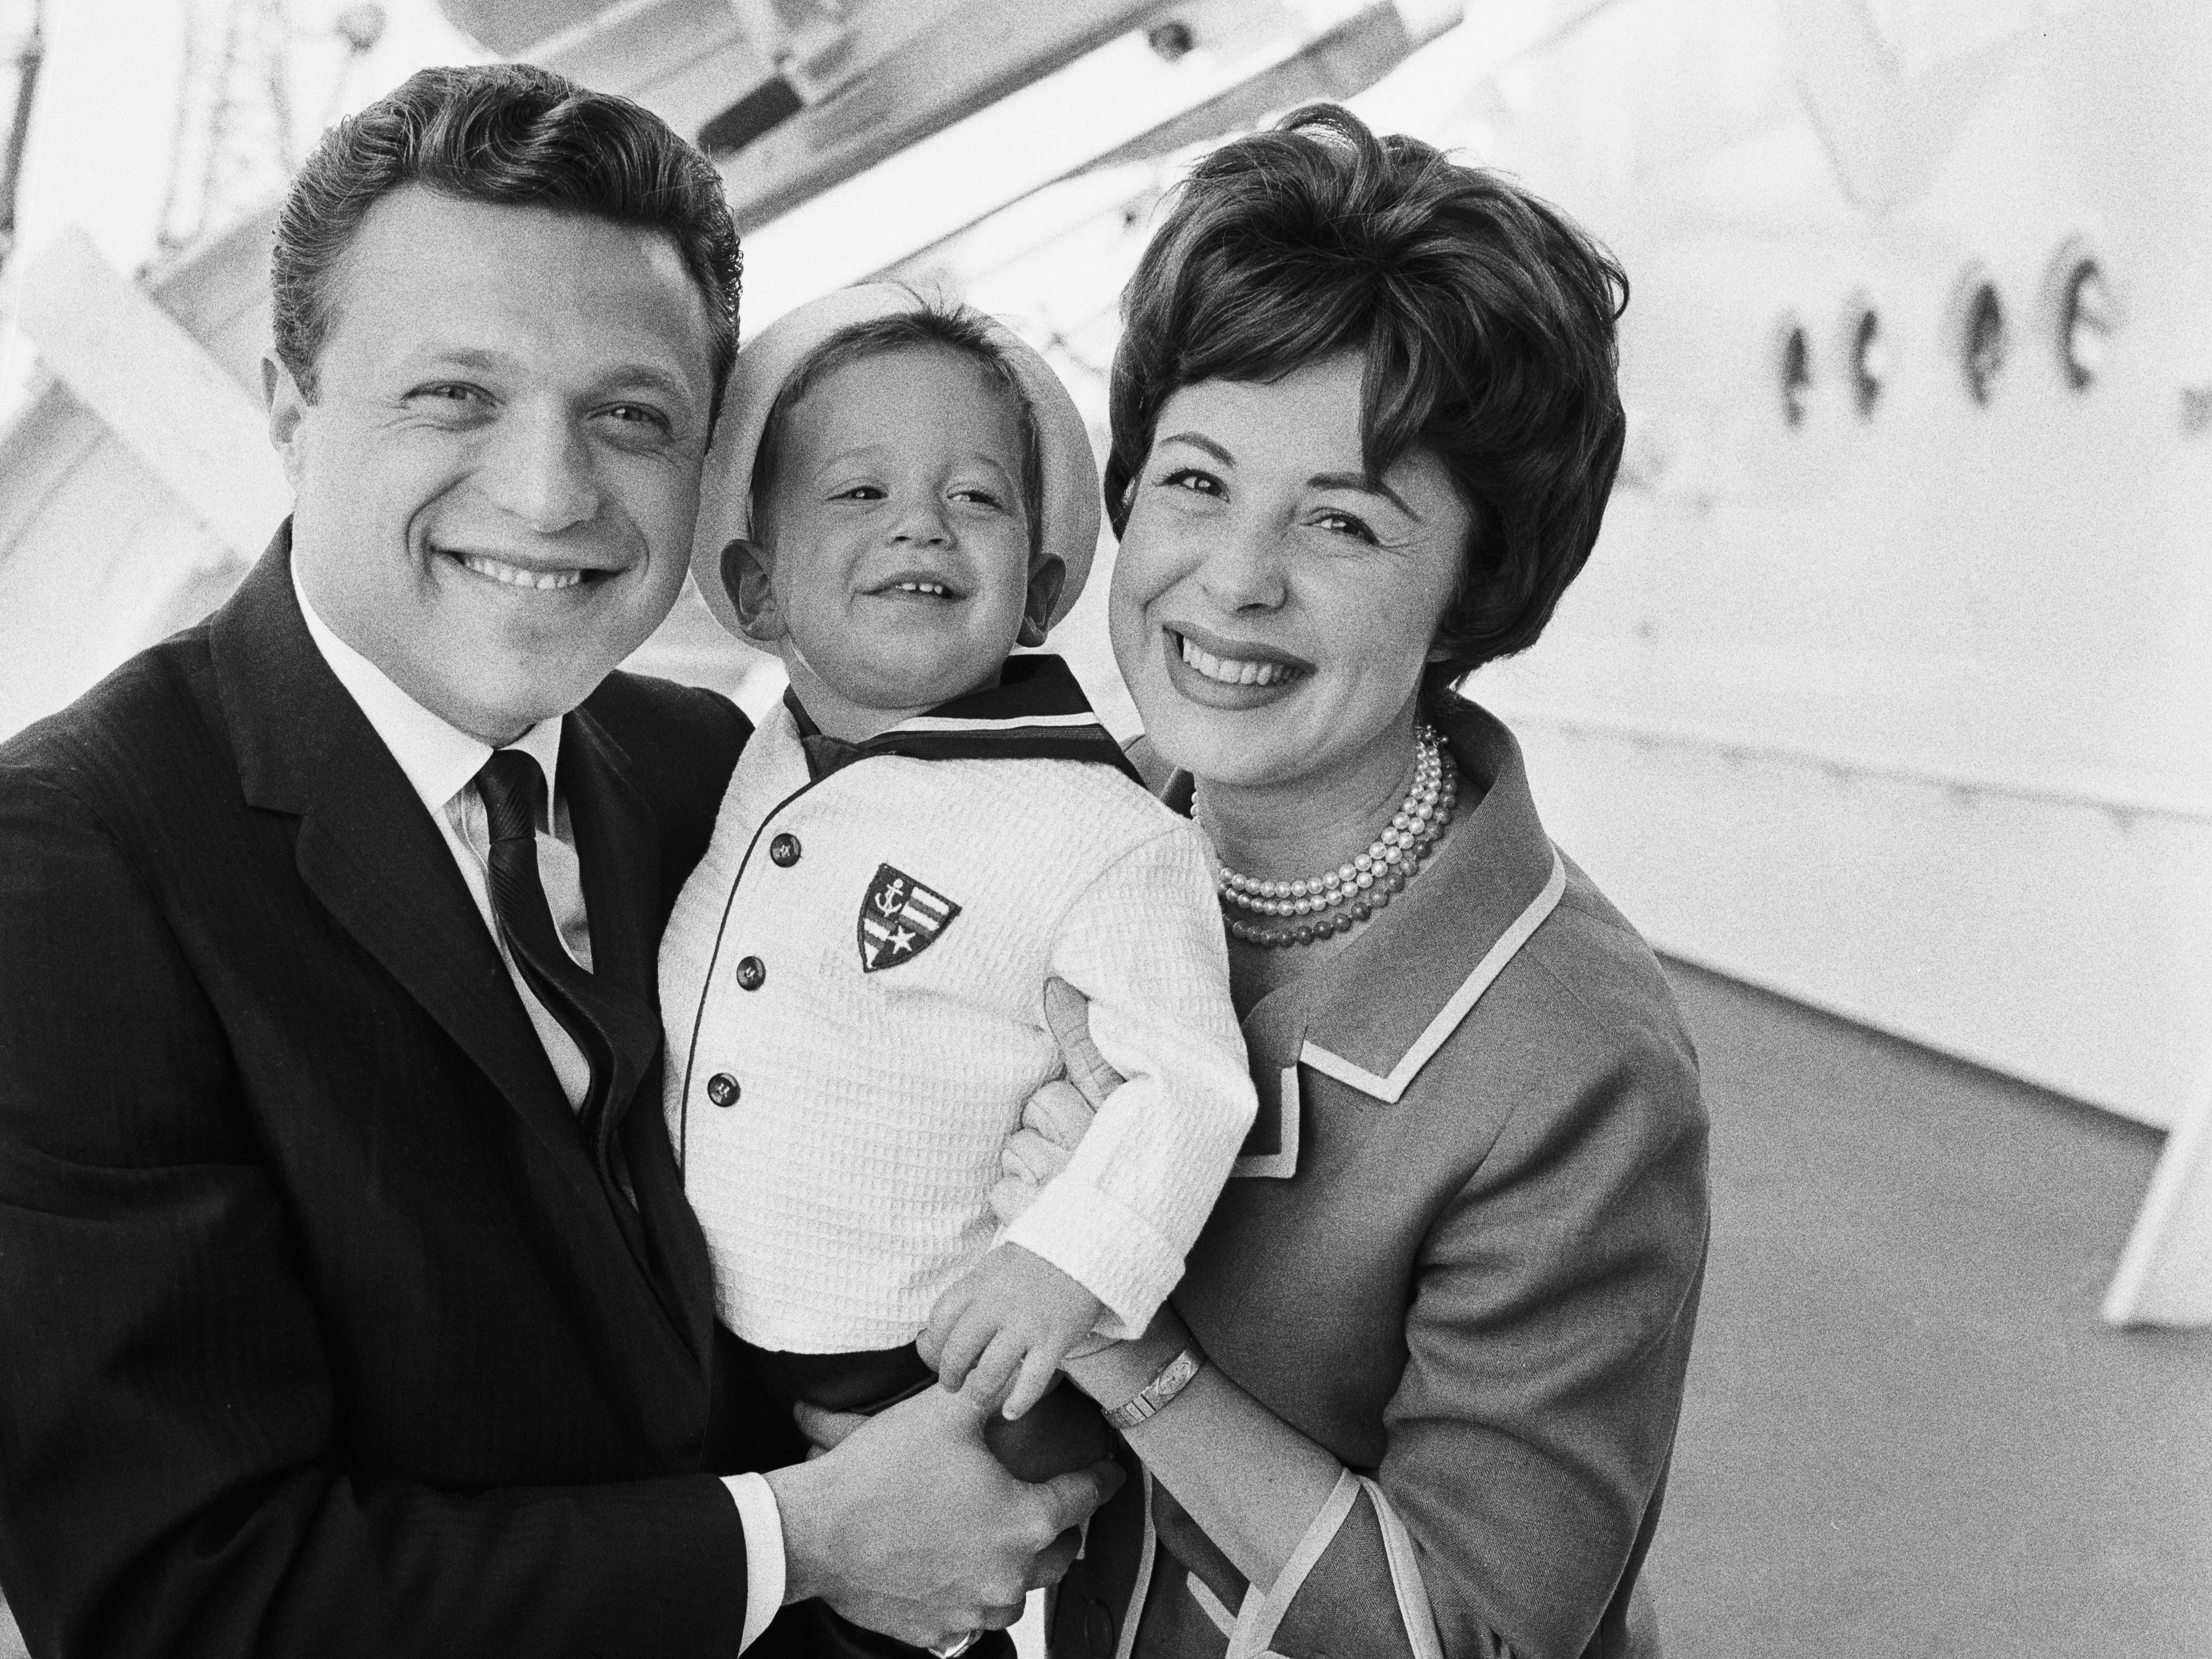 Steve Lawrence and wife Eydie Gormé with their son David